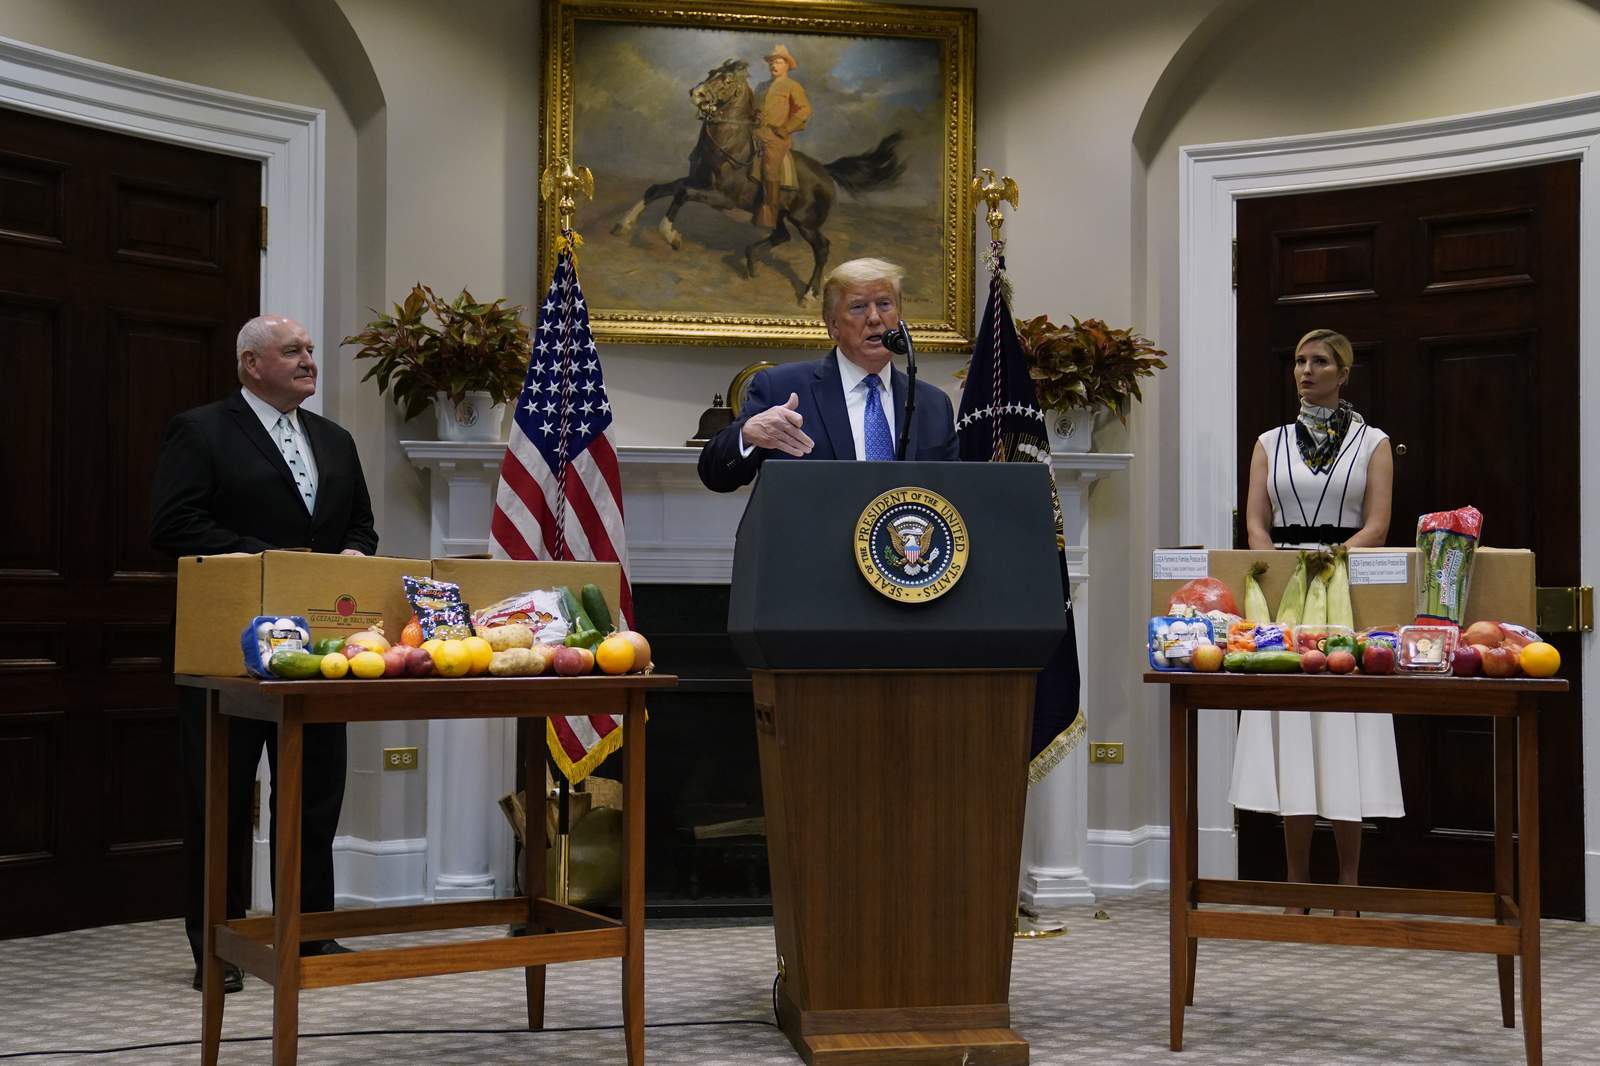 President Trump announces $19B program to help farmers, provide food assistance